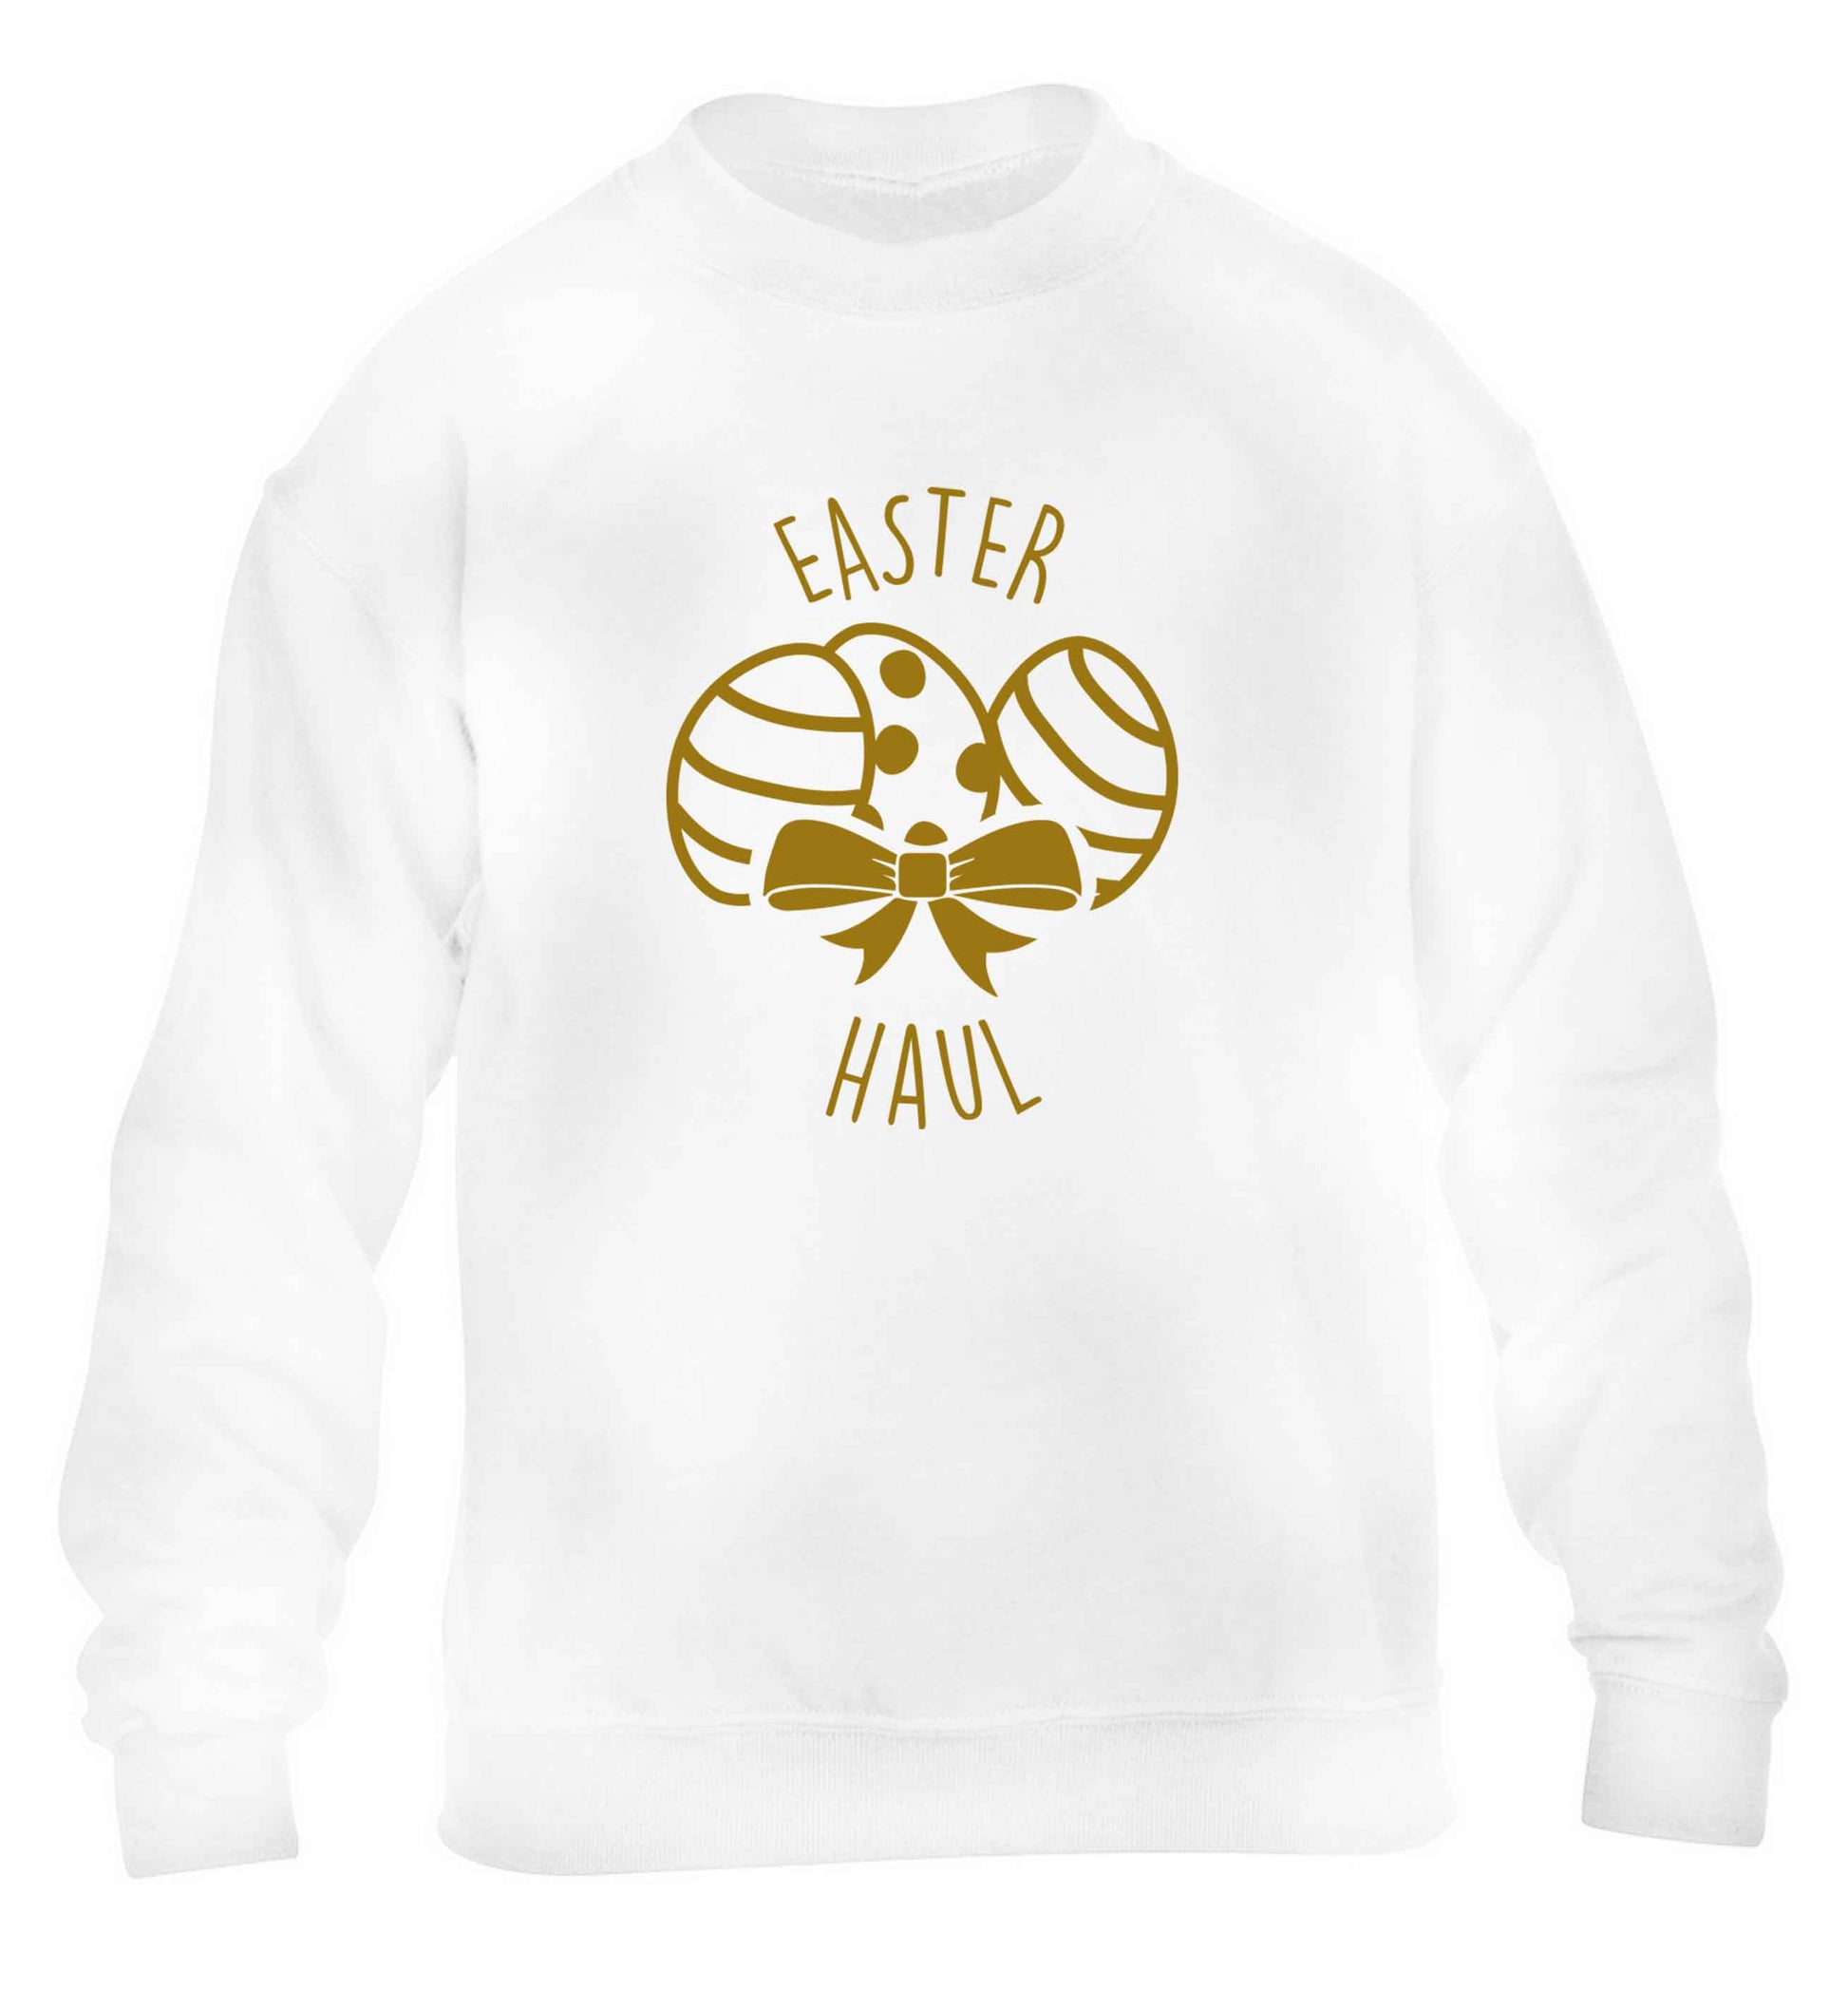 Easter haul children's white sweater 12-13 Years